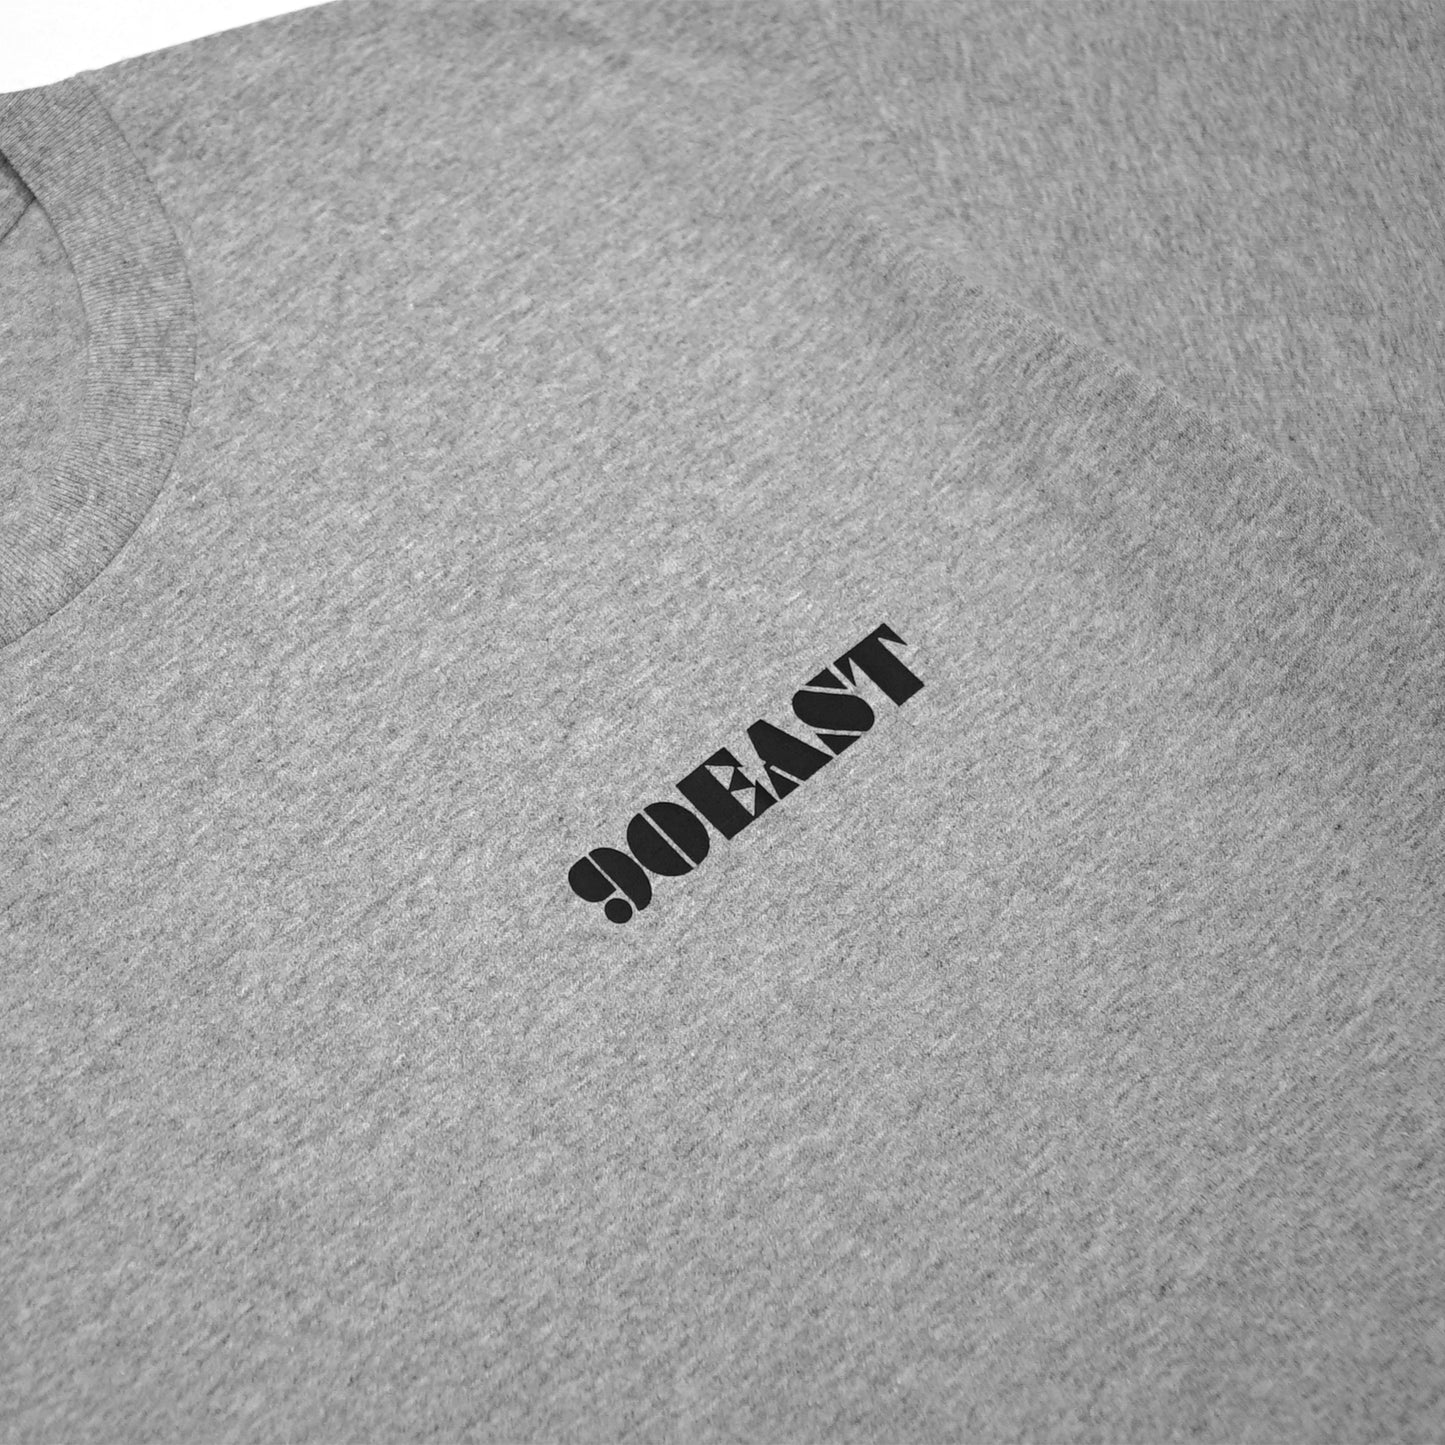 90EAST - Works T-Shirt/Heather Grey